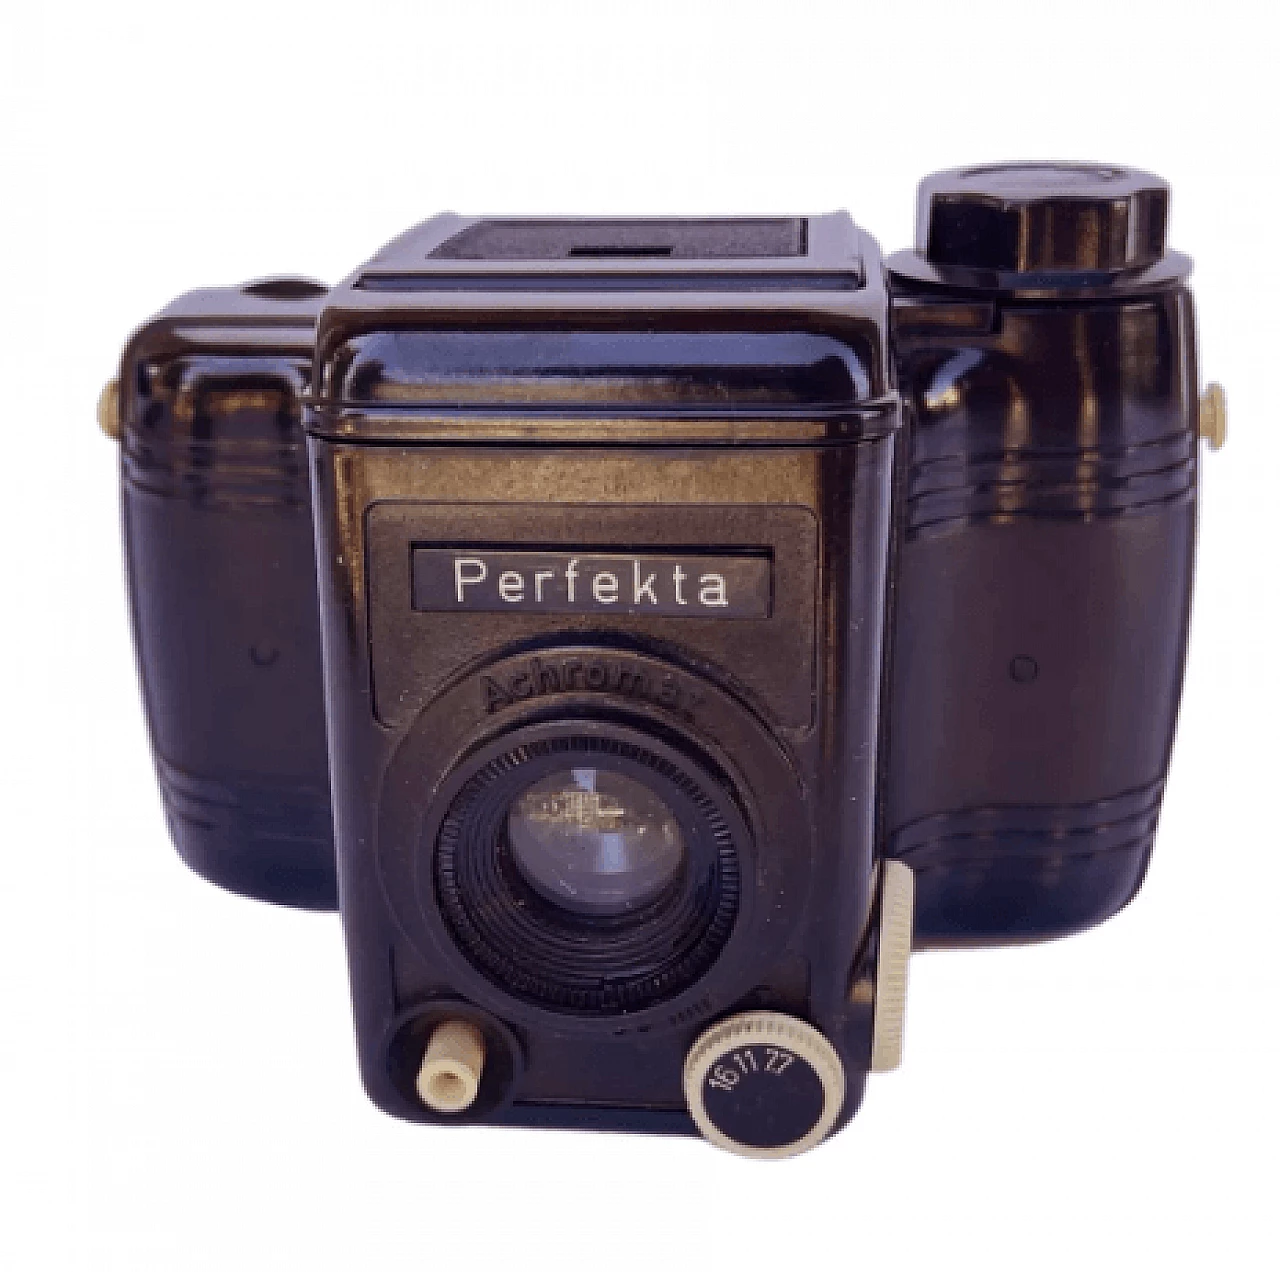 Perfekta Aeromat camera by VEB Rheinmatall, 1950s 6